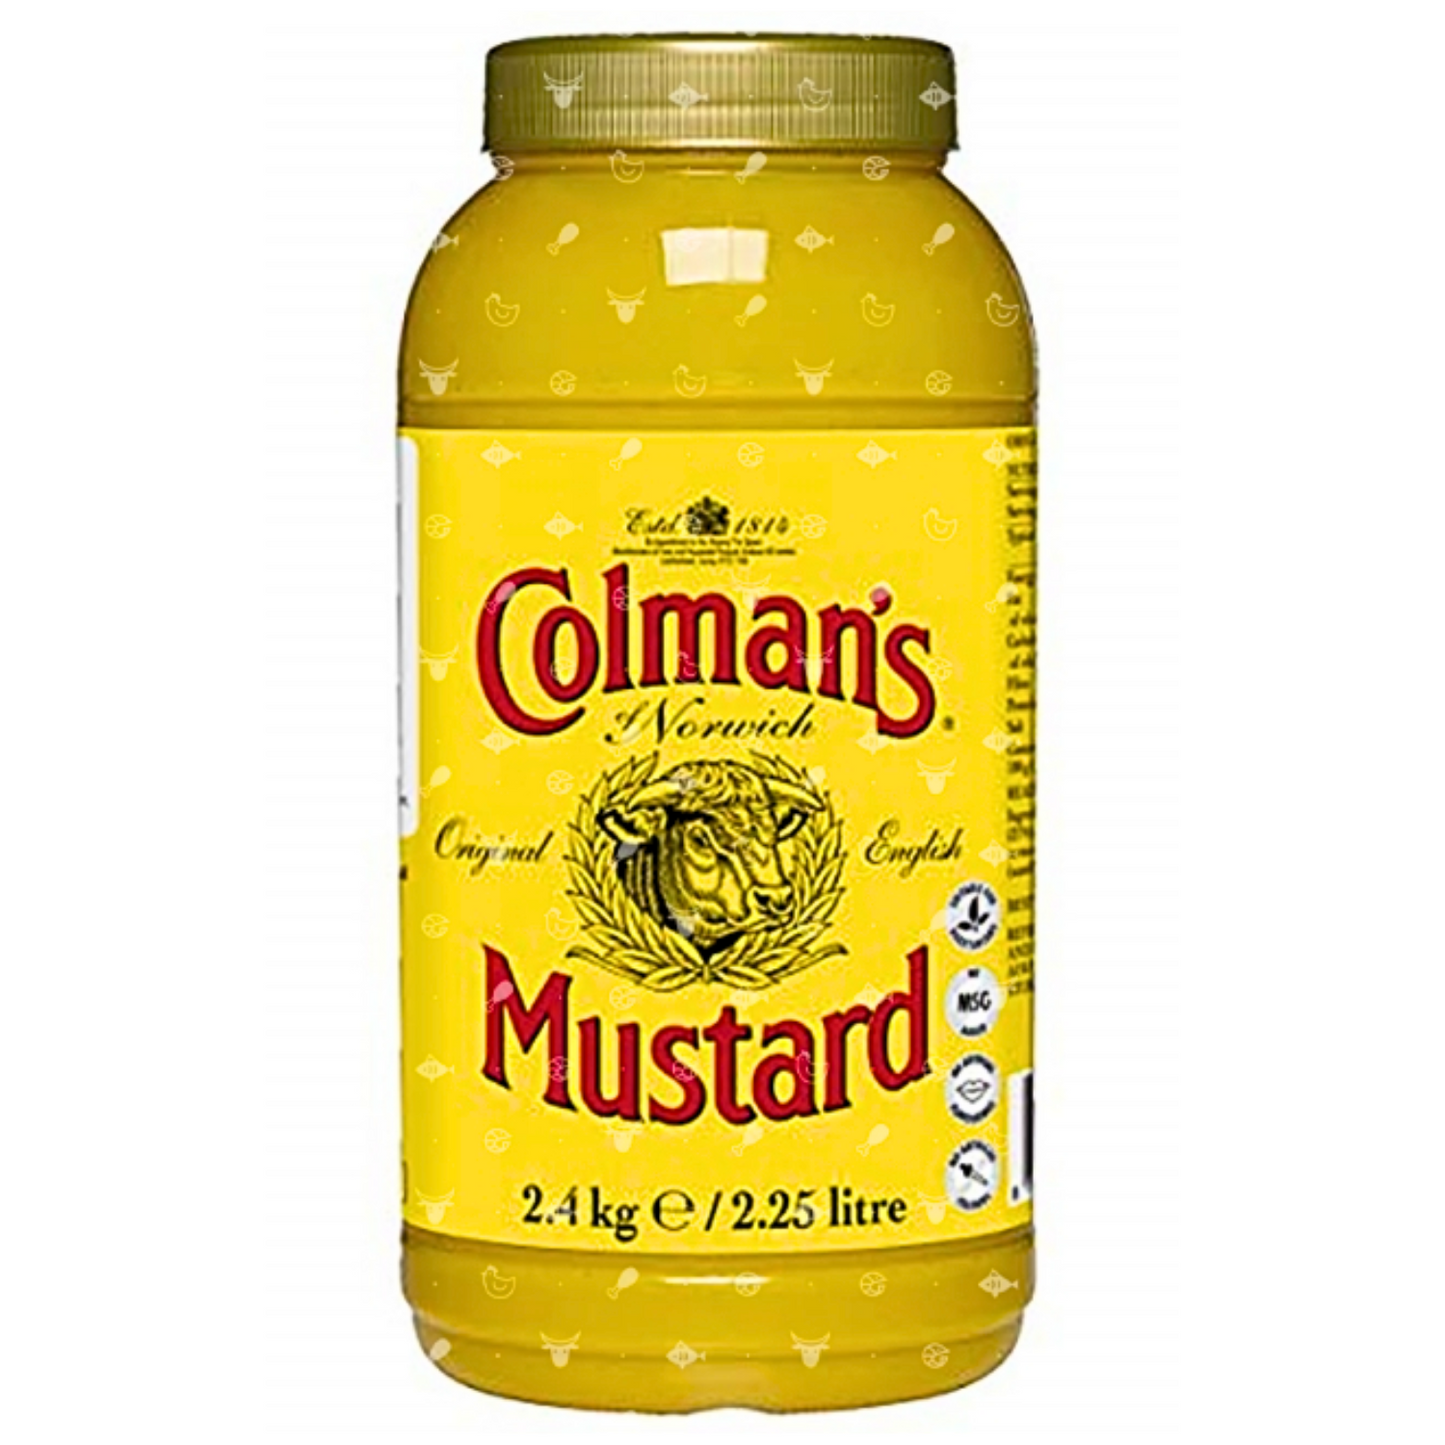 Mustard - Colmans 2.4kg